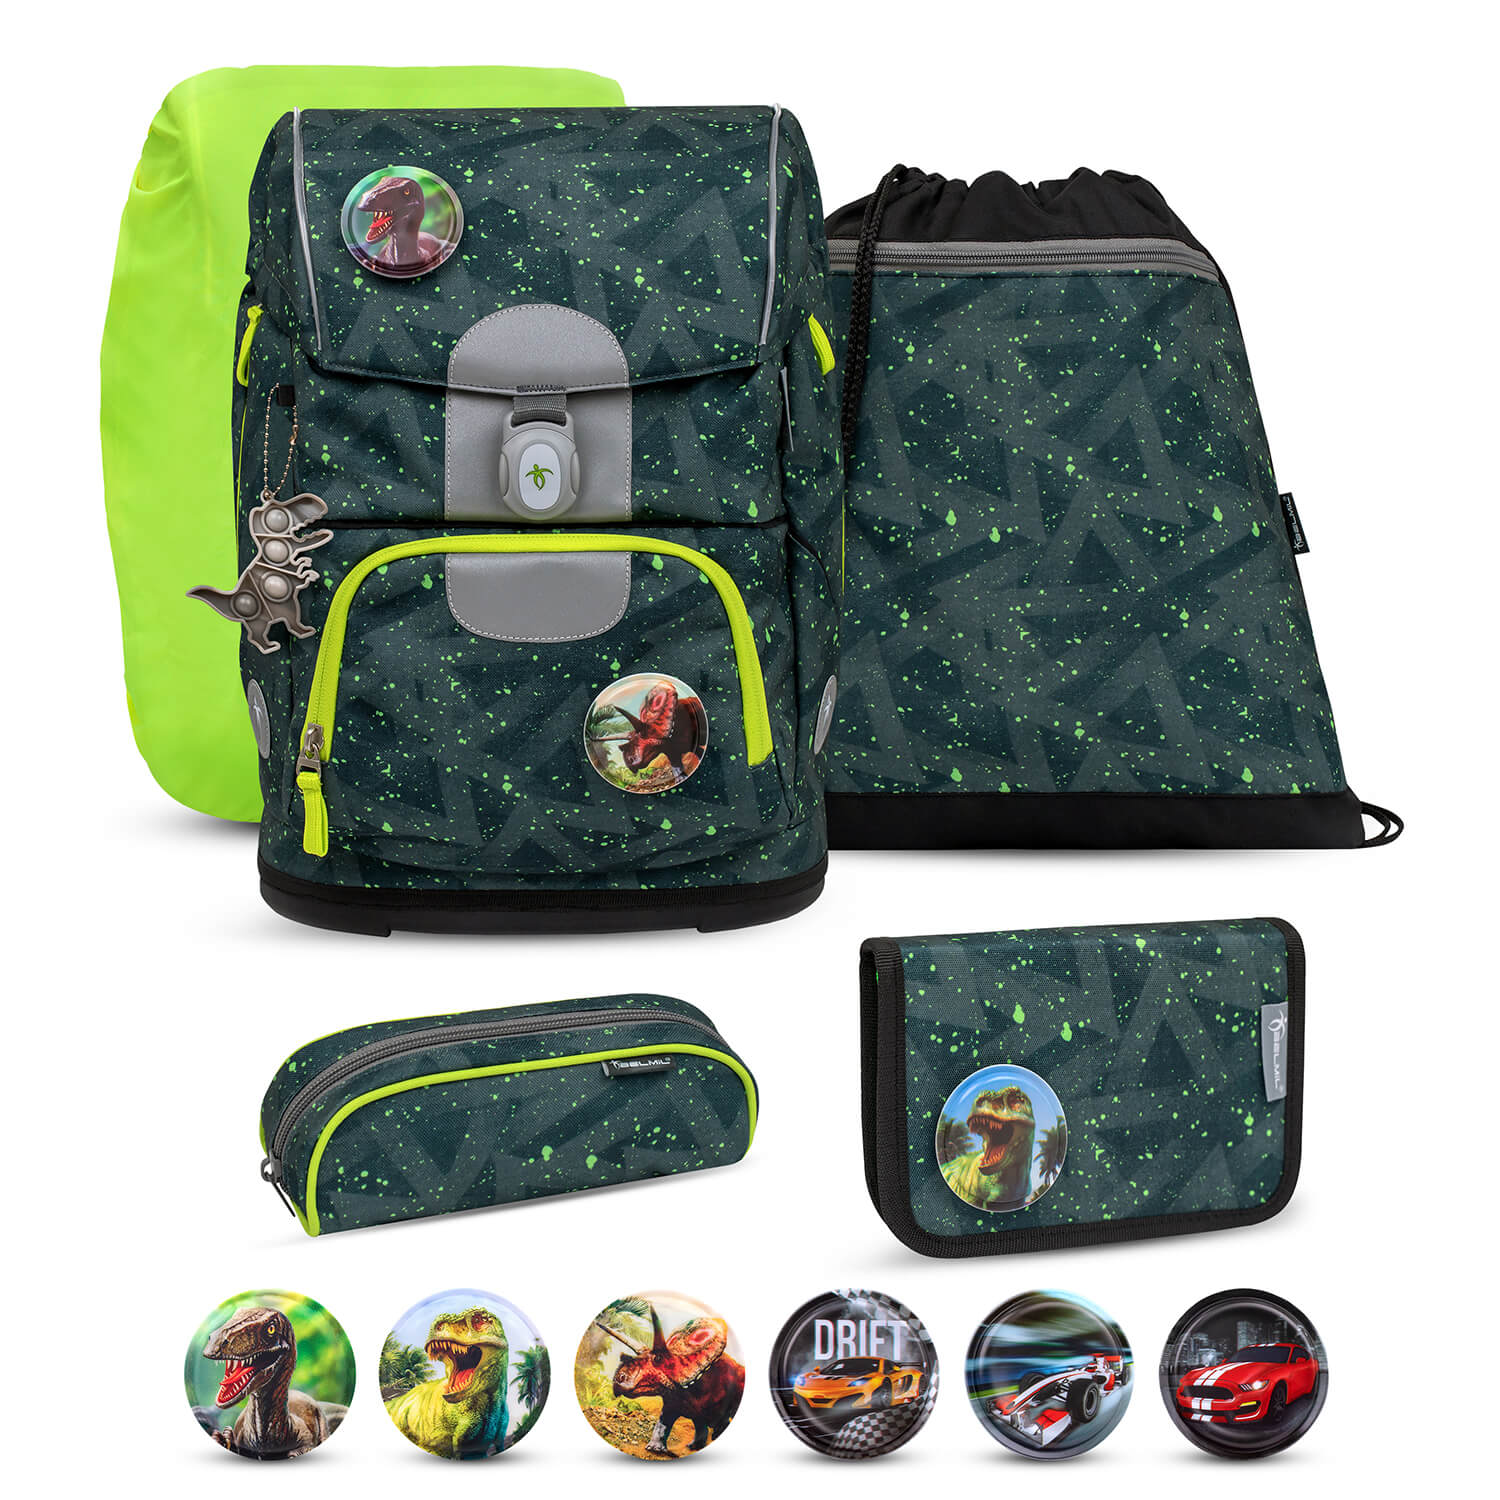 Motion Green Splash schoolbag set 6 pcs